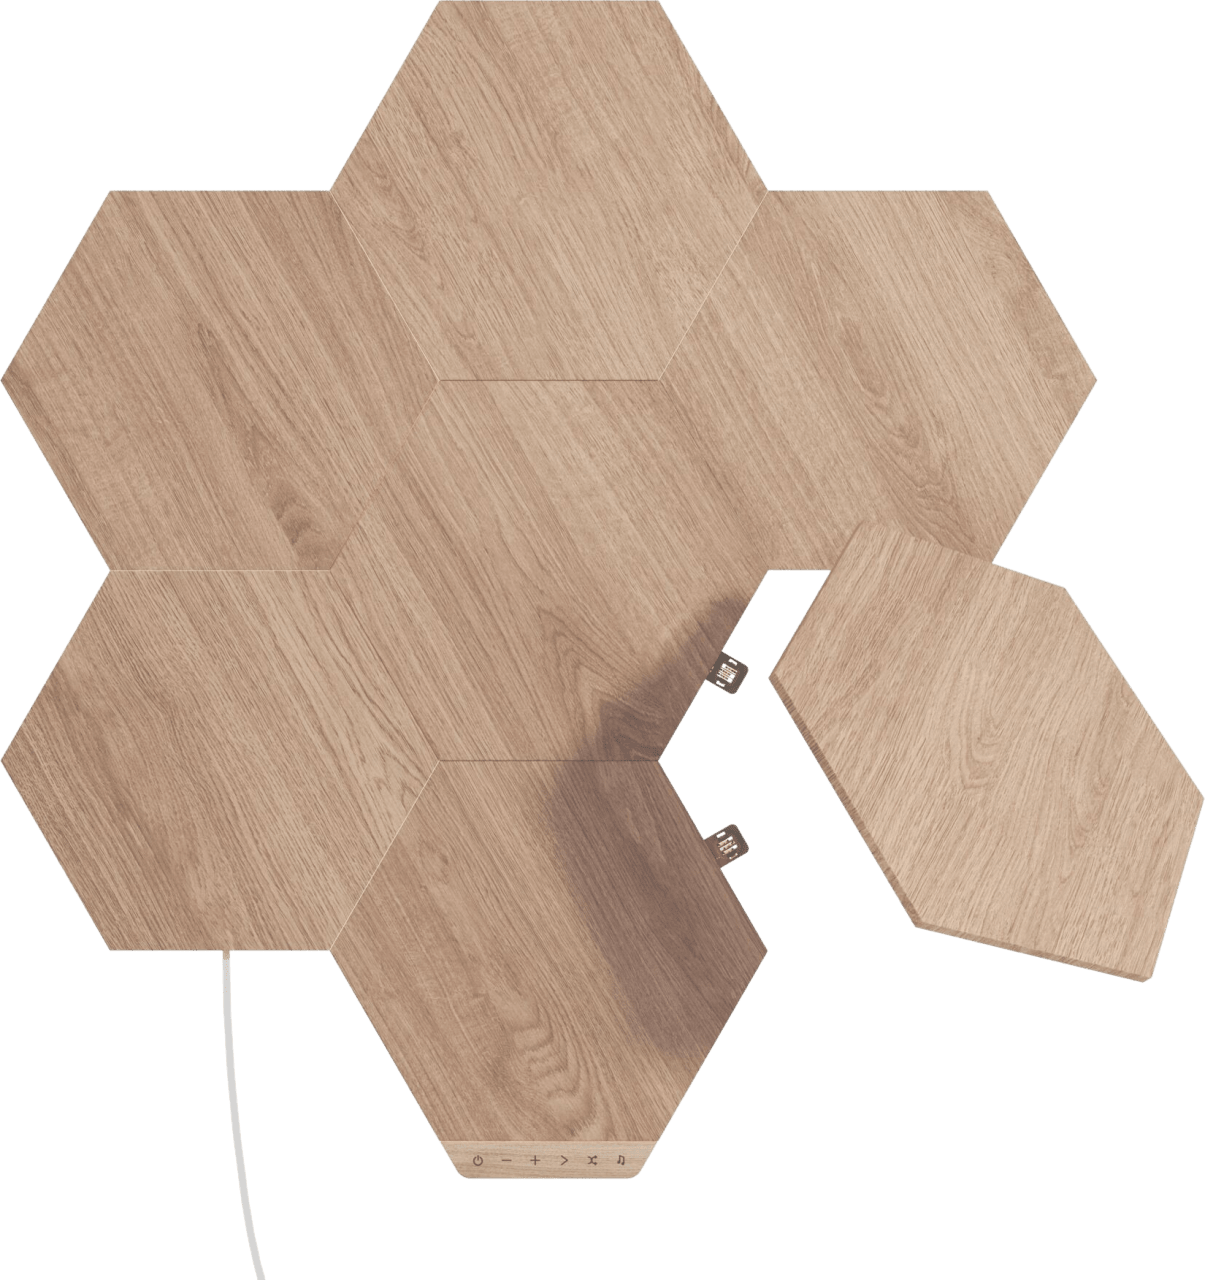 Wood Nanoleaf Elements Wood Look Hexagons Starter Kit 7x.1